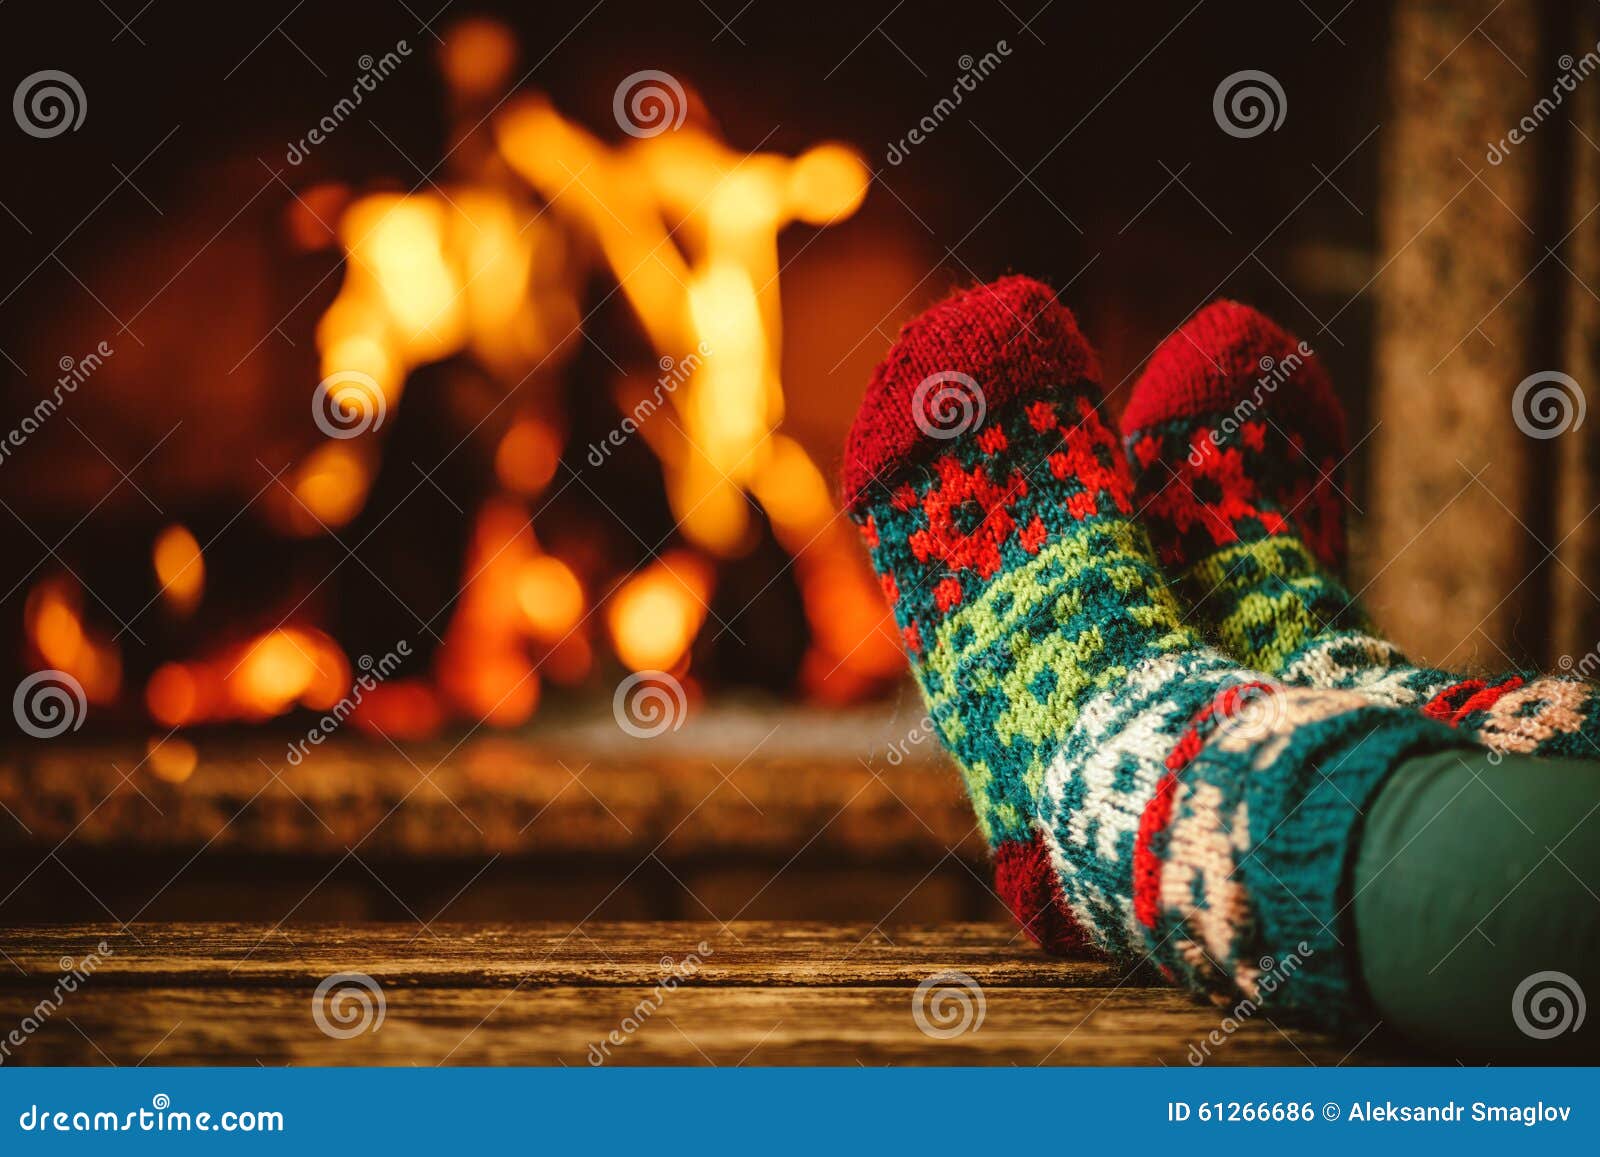 feet in woollen socks by the fireplace. woman relaxes by warm